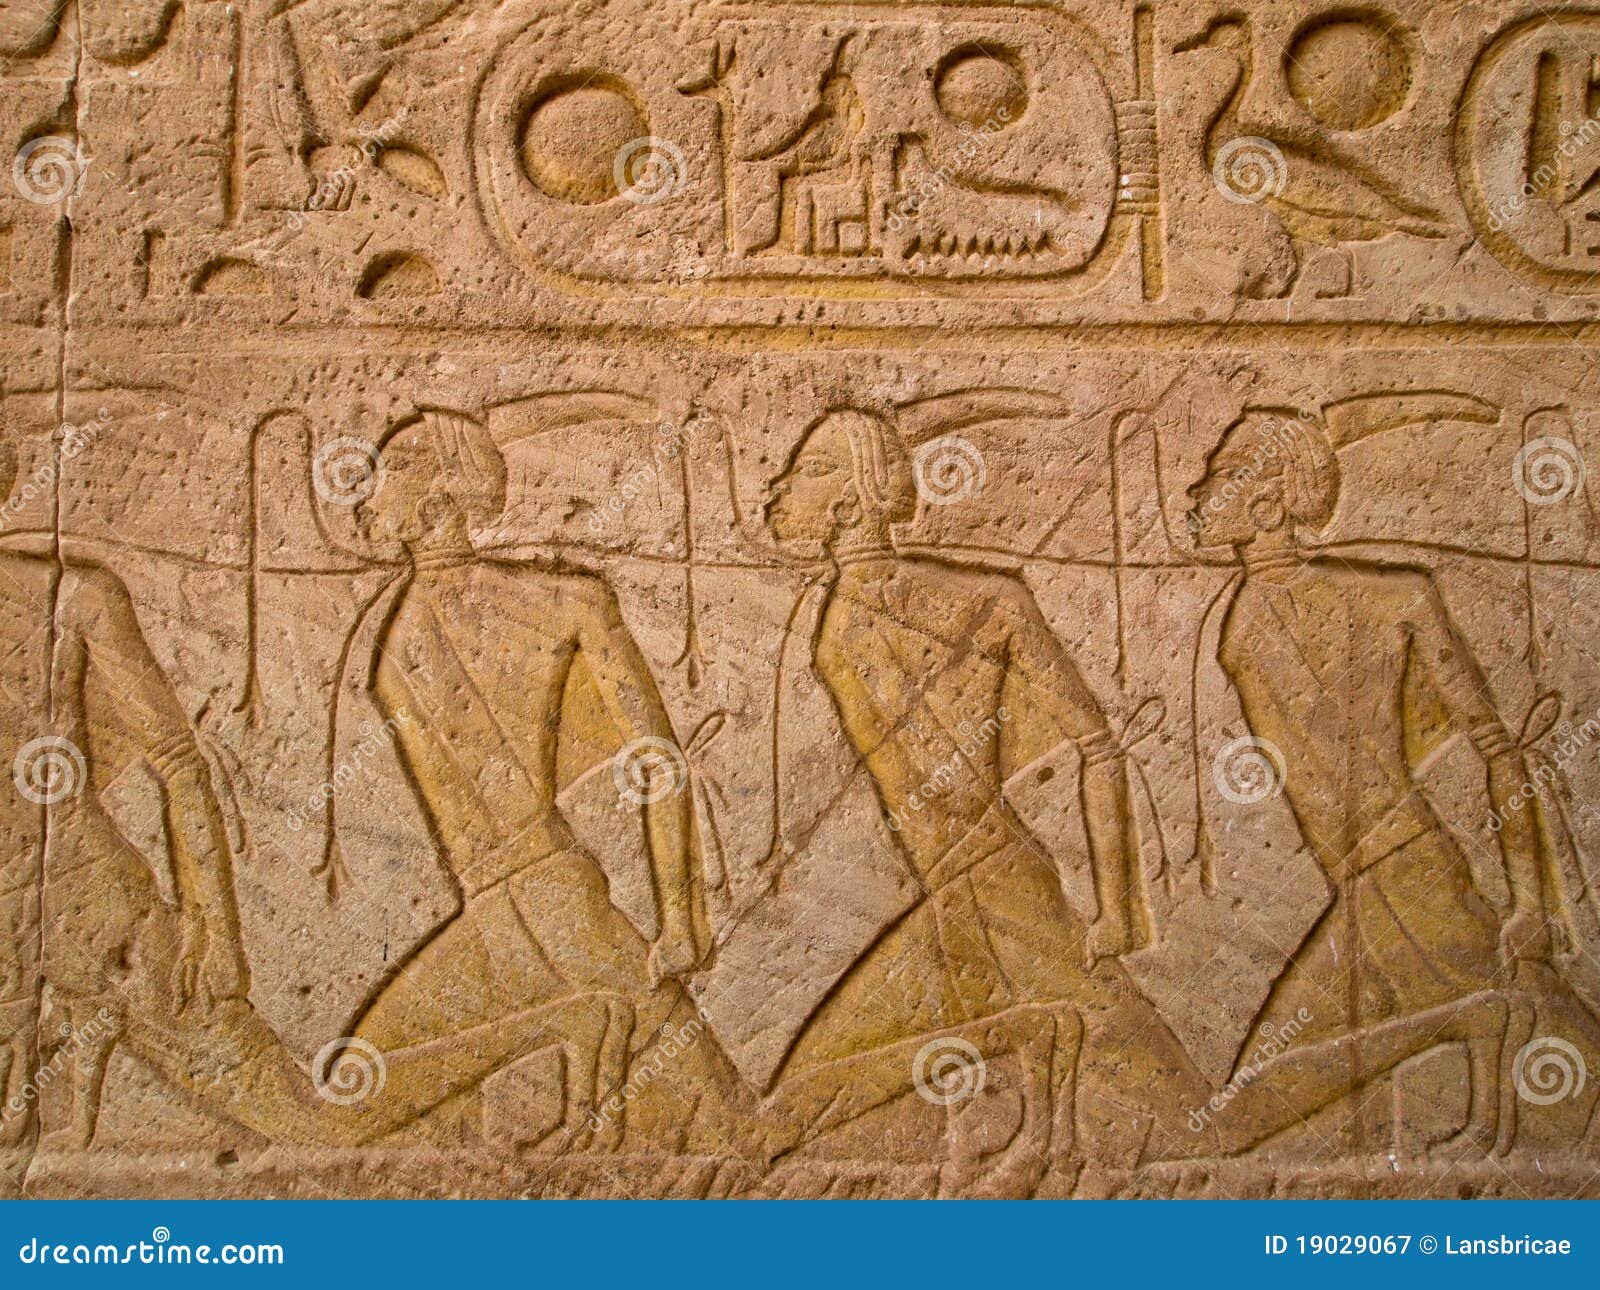 hieroglyphics of slaves in abu simbel